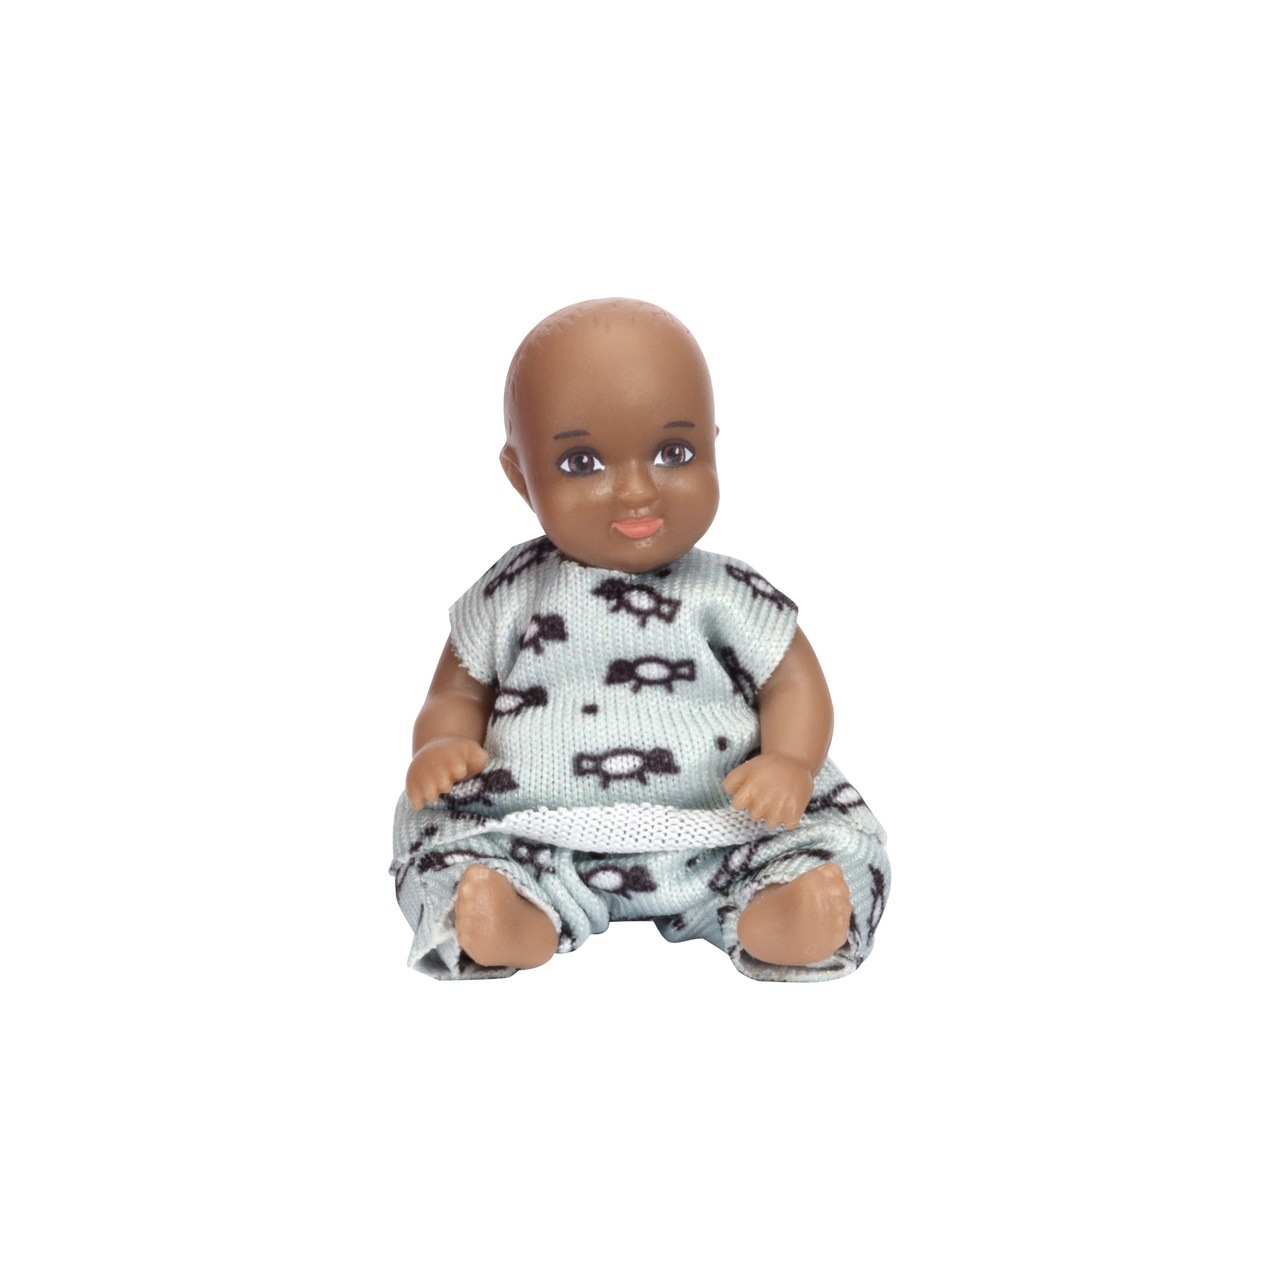 Dollhouse dolls & animals	 lundby dollhouse doll nikki baby